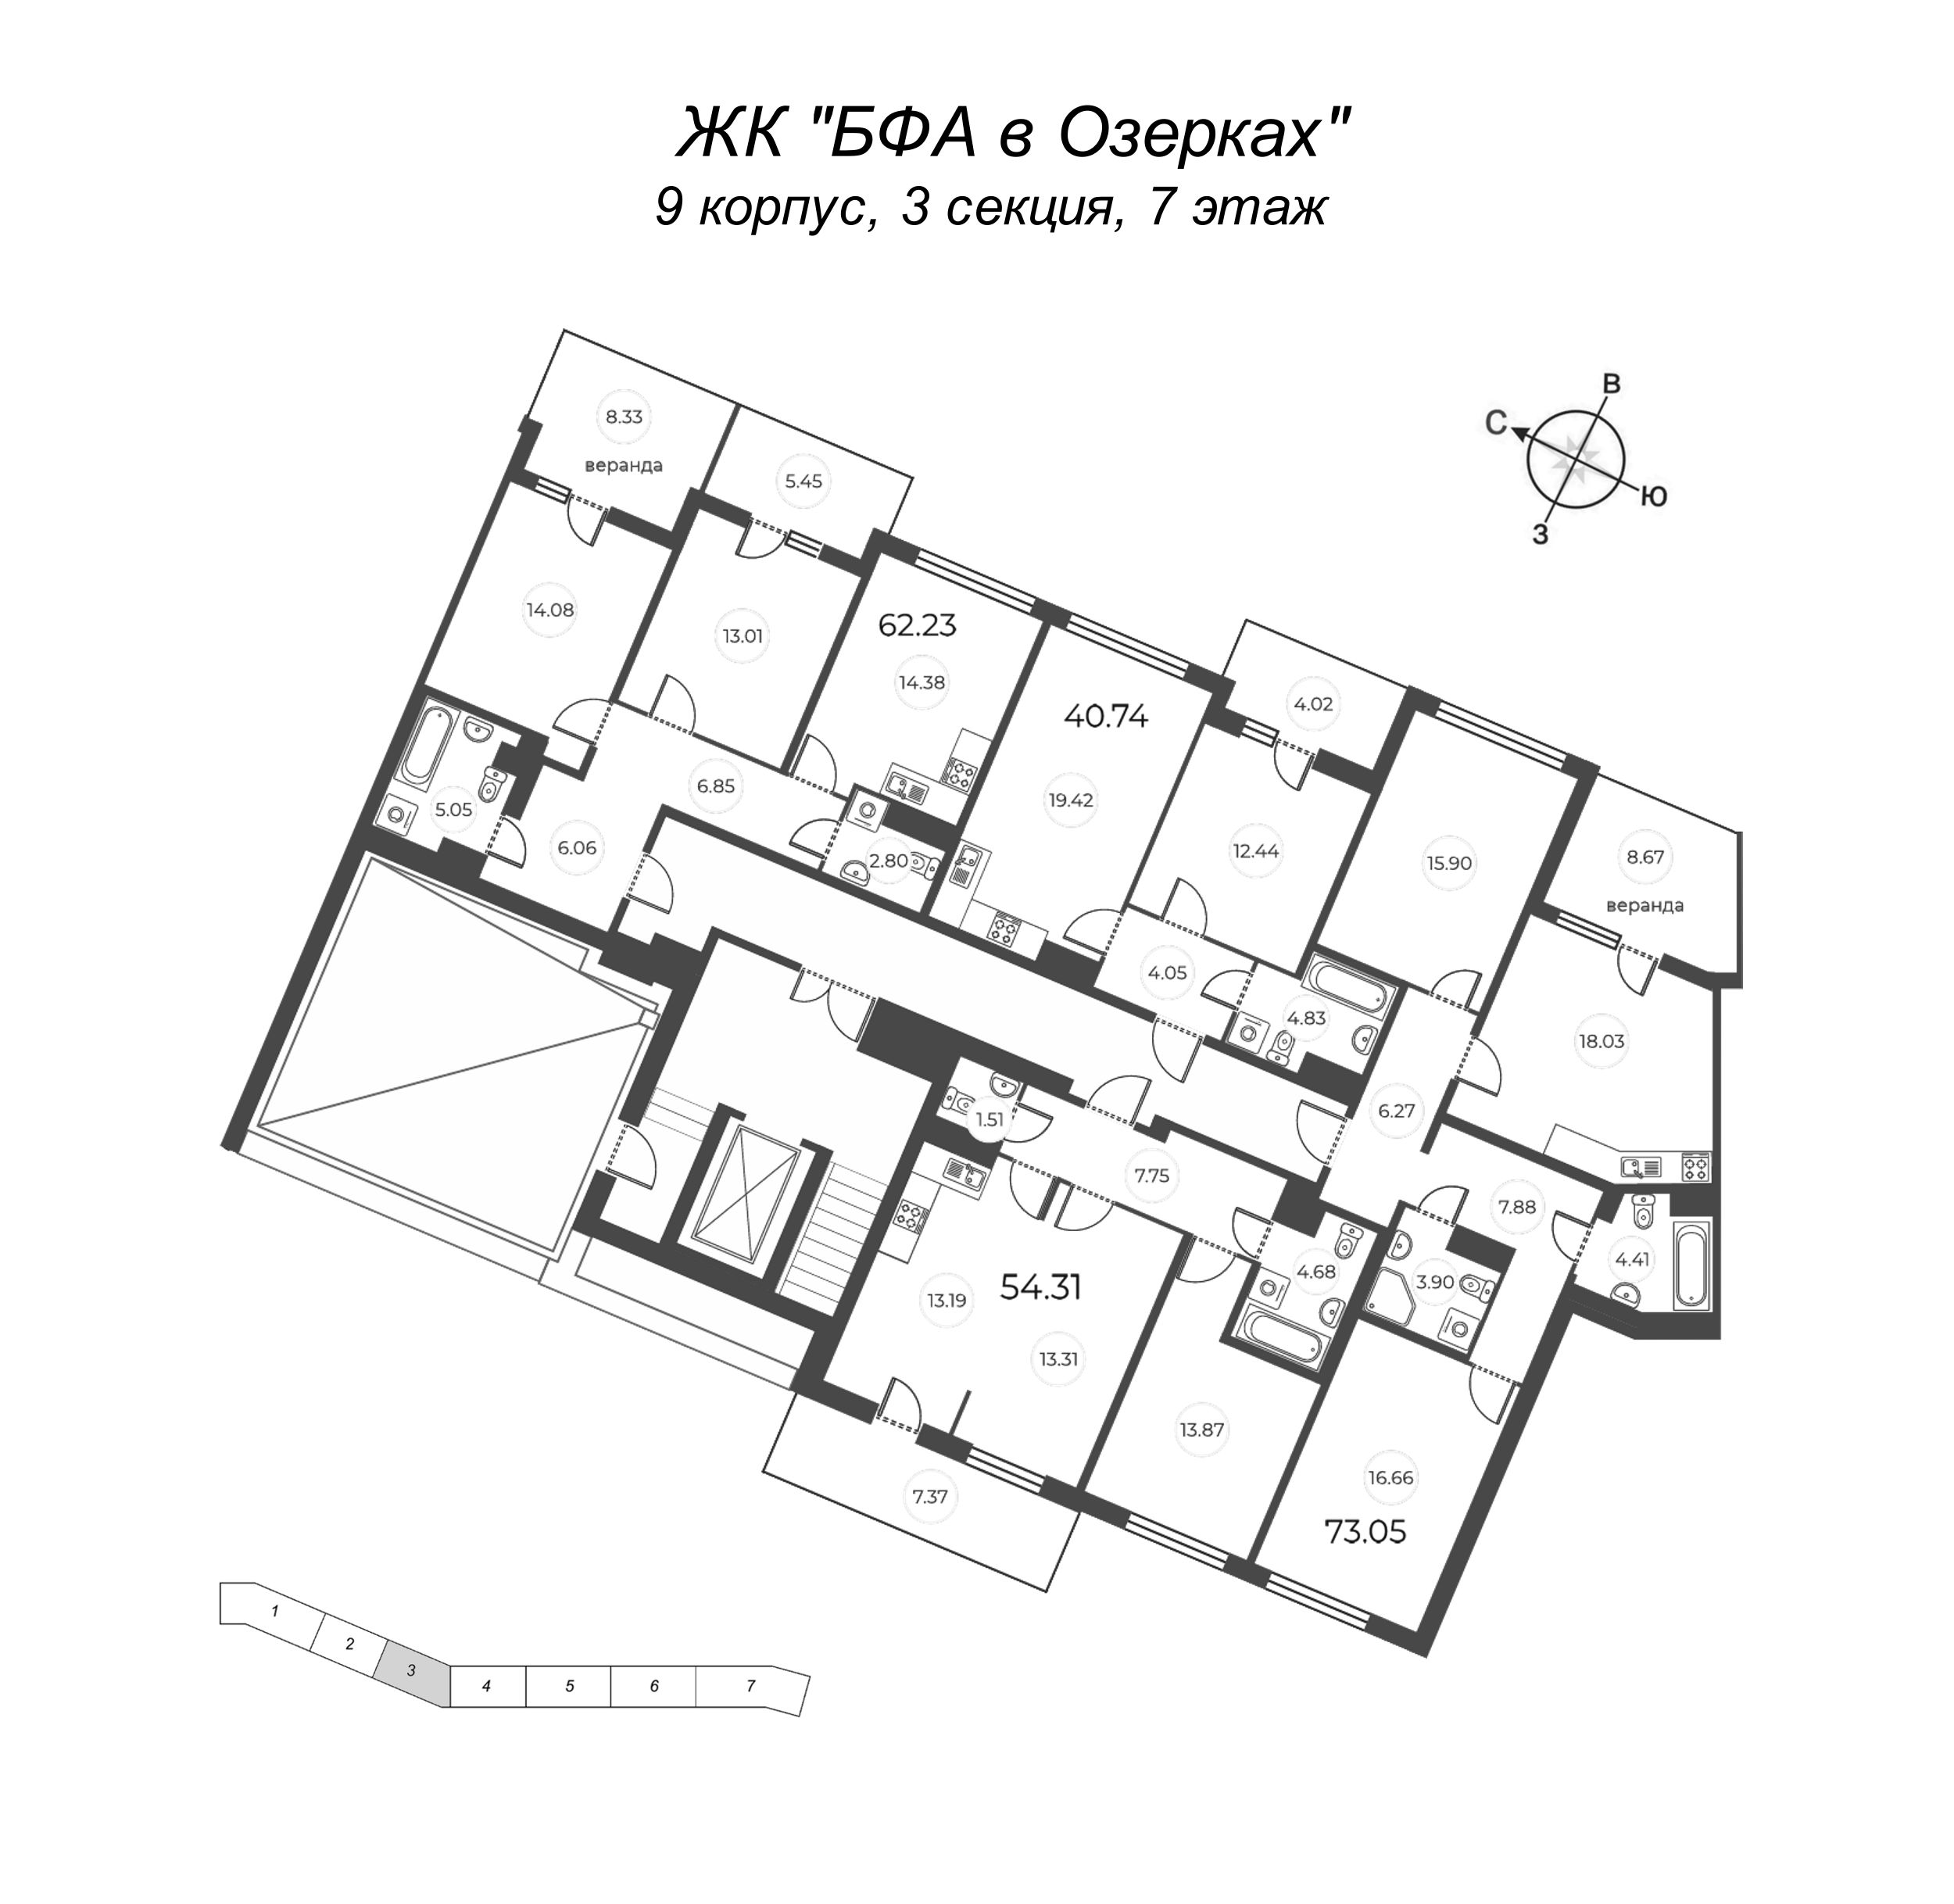 2-комнатная (Евро) квартира, 56.52 м² - планировка этажа